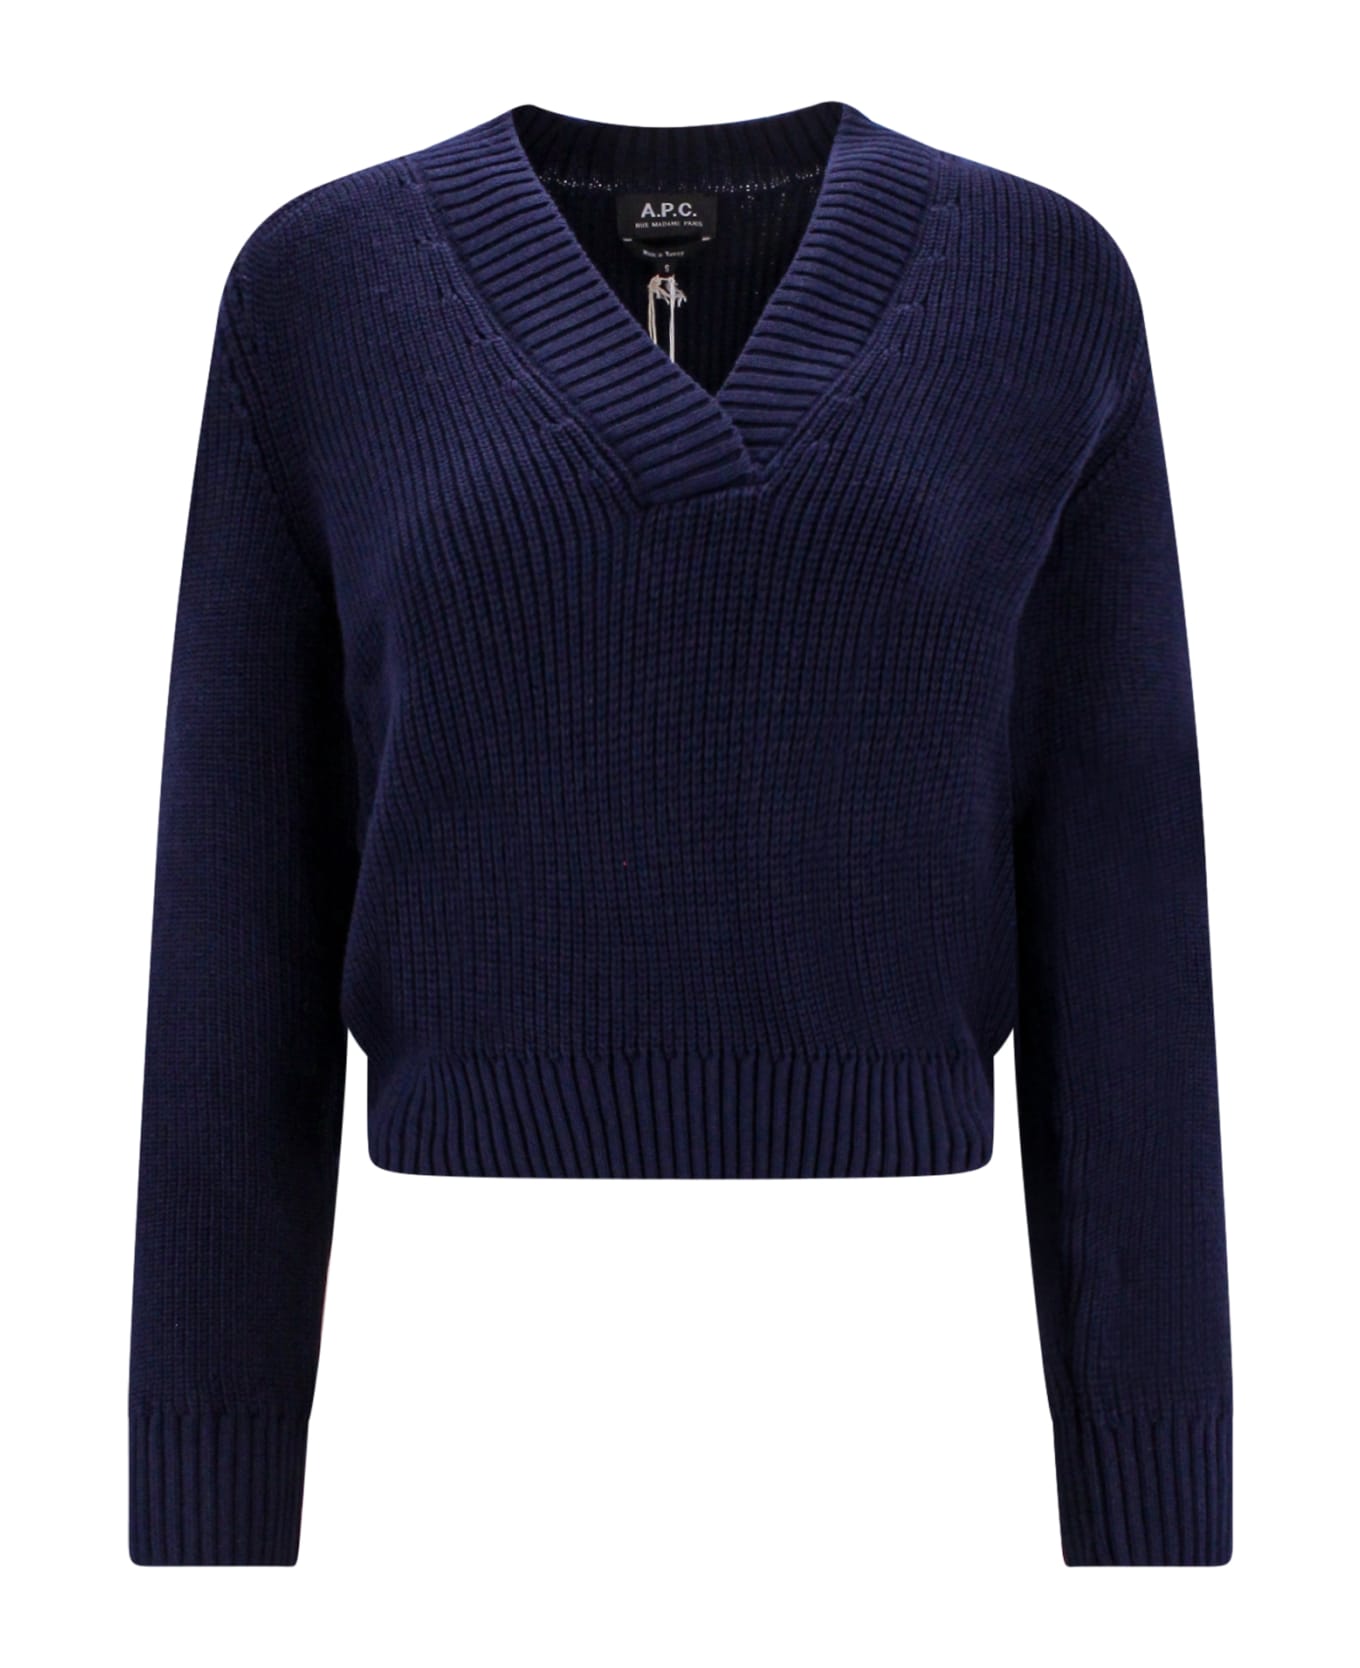 A.P.C. Harmony Sweater - Blue